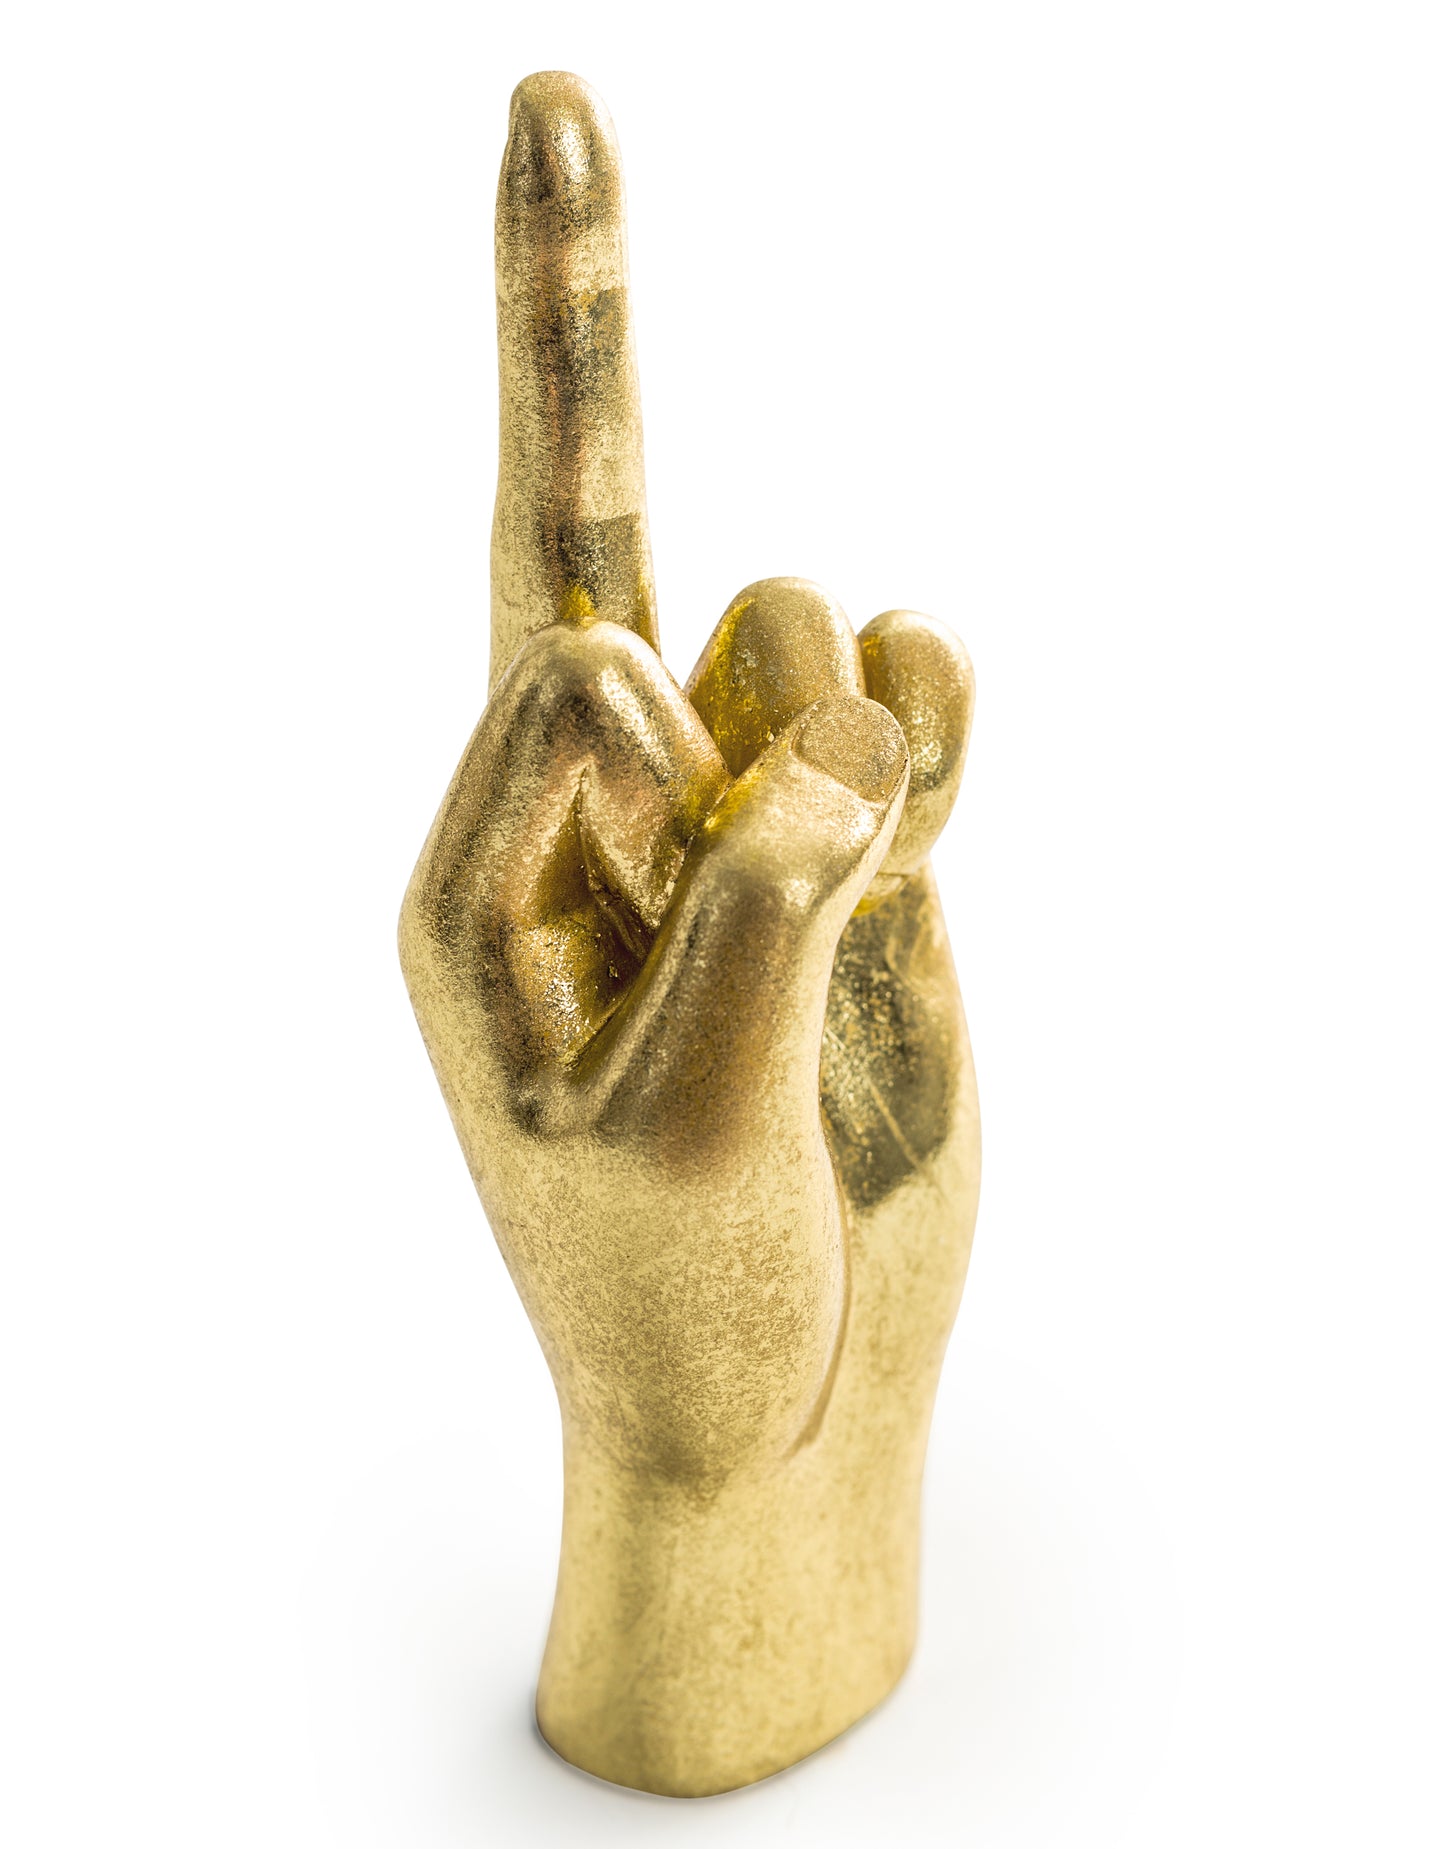 Middle Finger Hand Figure